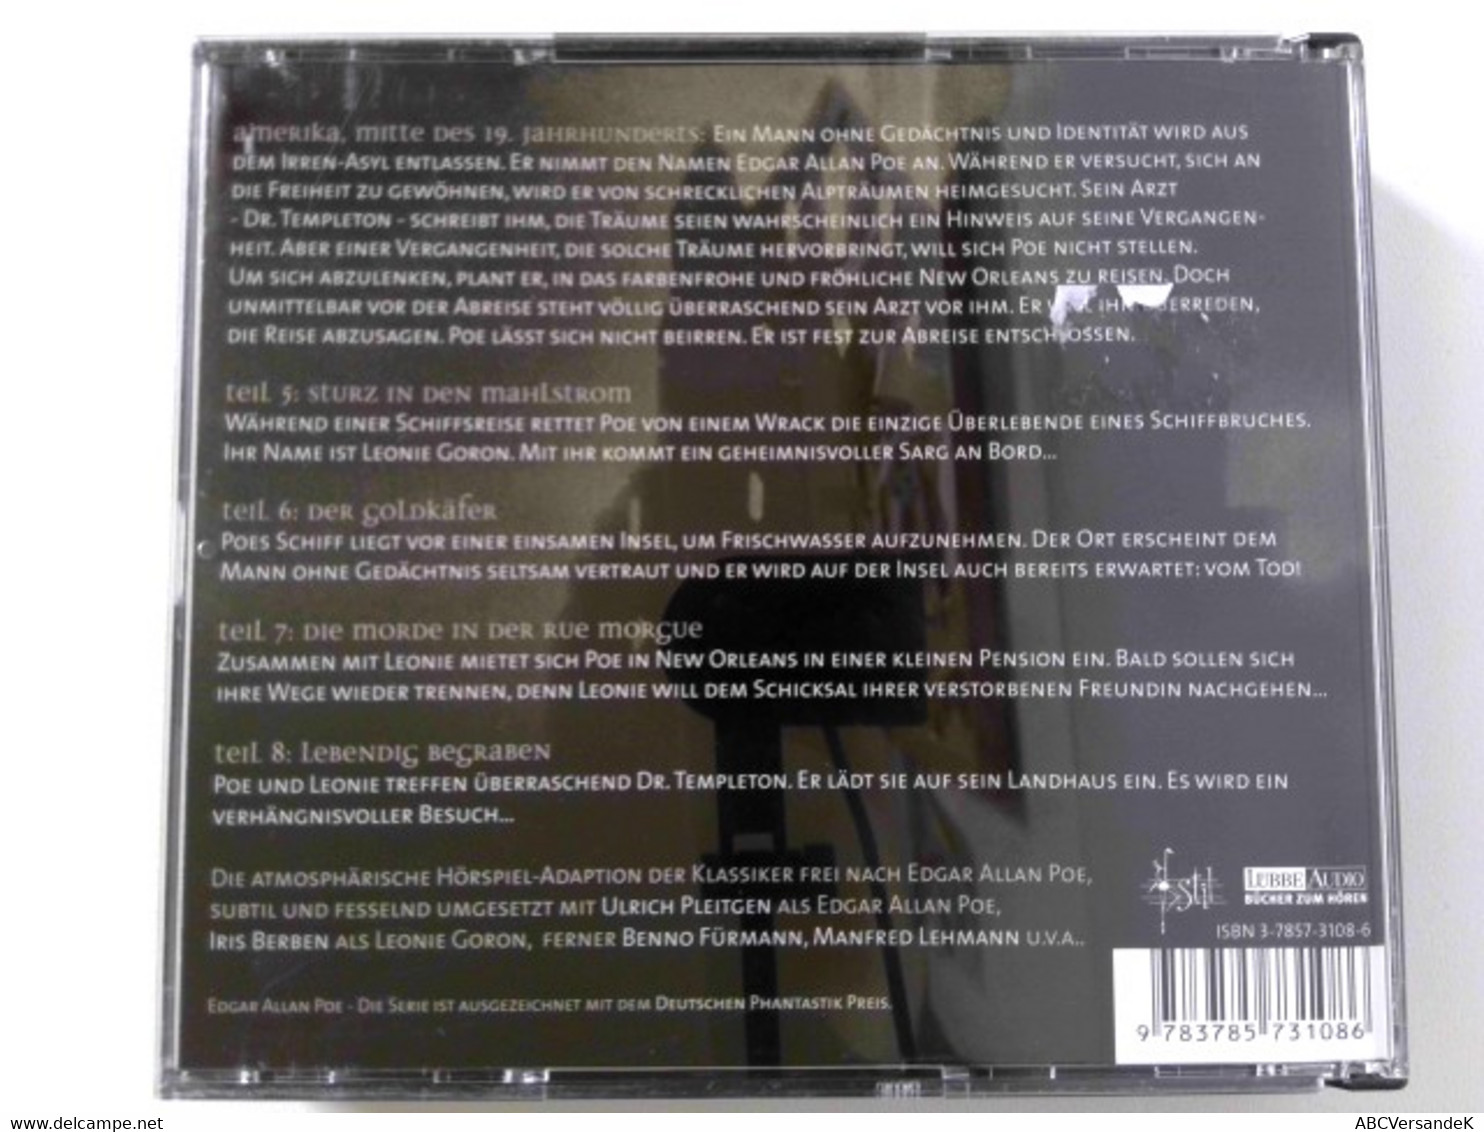 Edgar Allan Poe - Die Serie - Box 2 (Folgen 5-8), 4 Audio-CDs - CDs